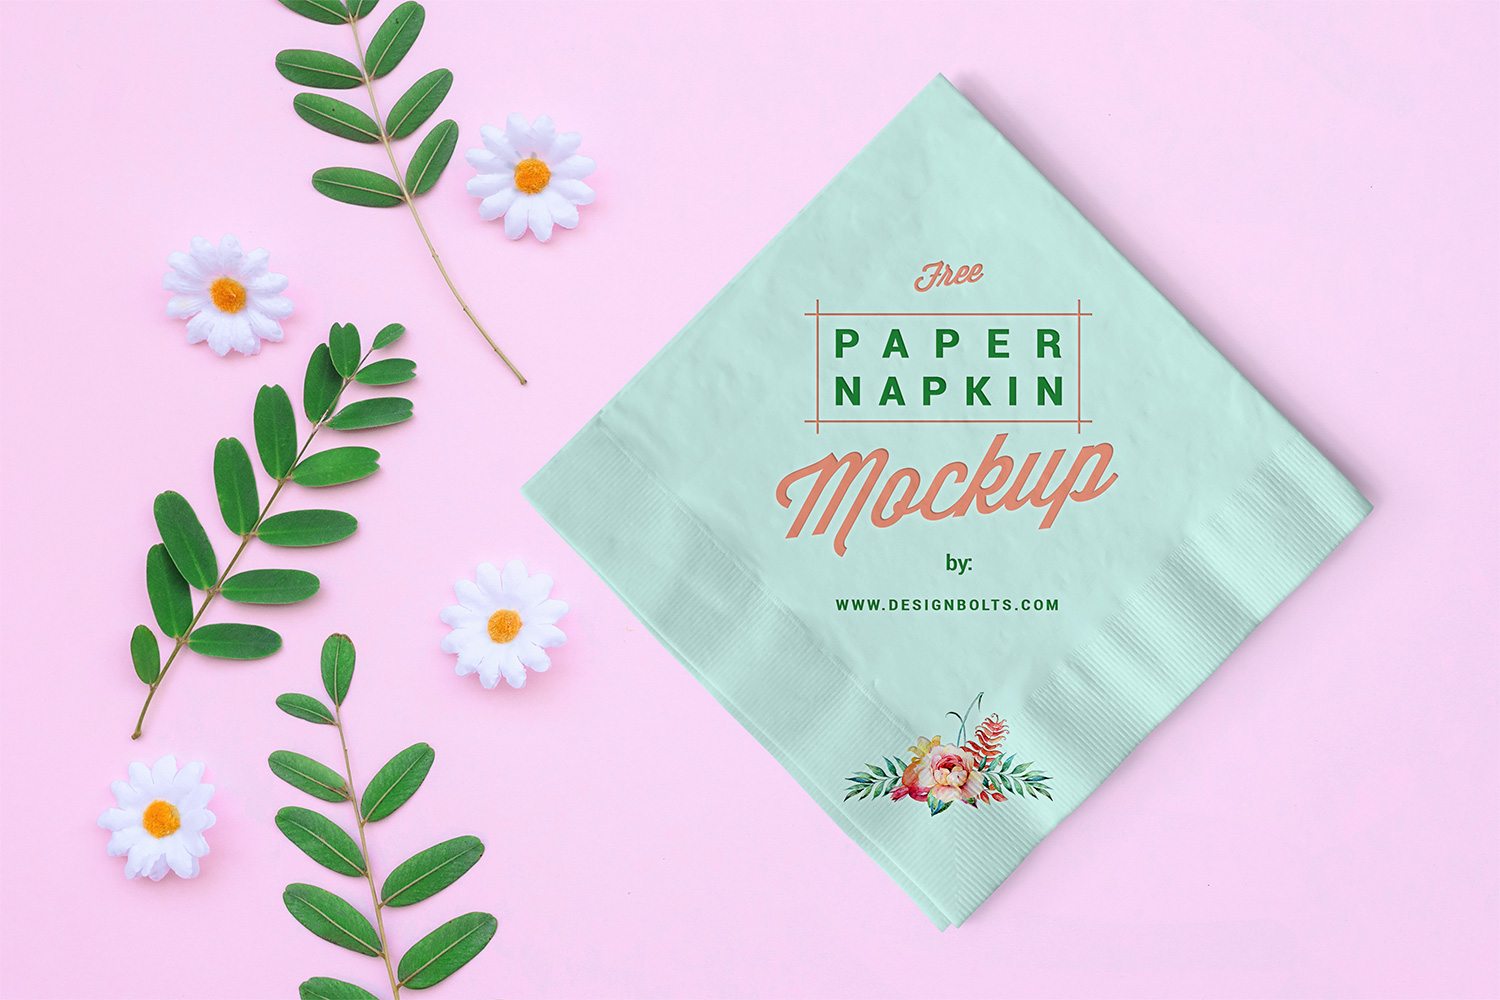 Download Free Table Paper Mockup PSD | Free Mockup